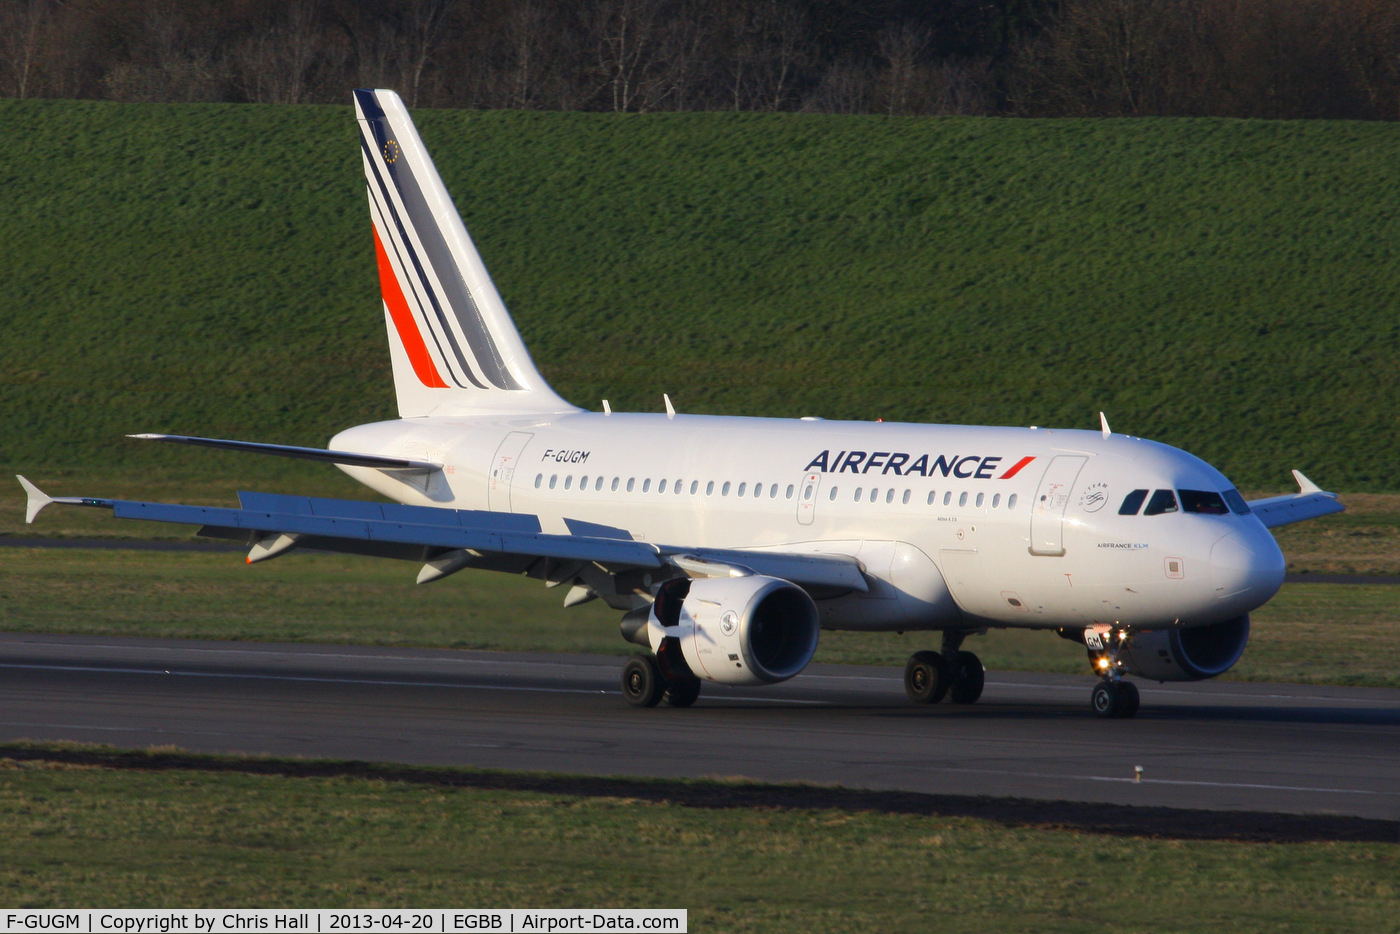 F-GUGM, 2006 Airbus A318-111 C/N 2750, Air France